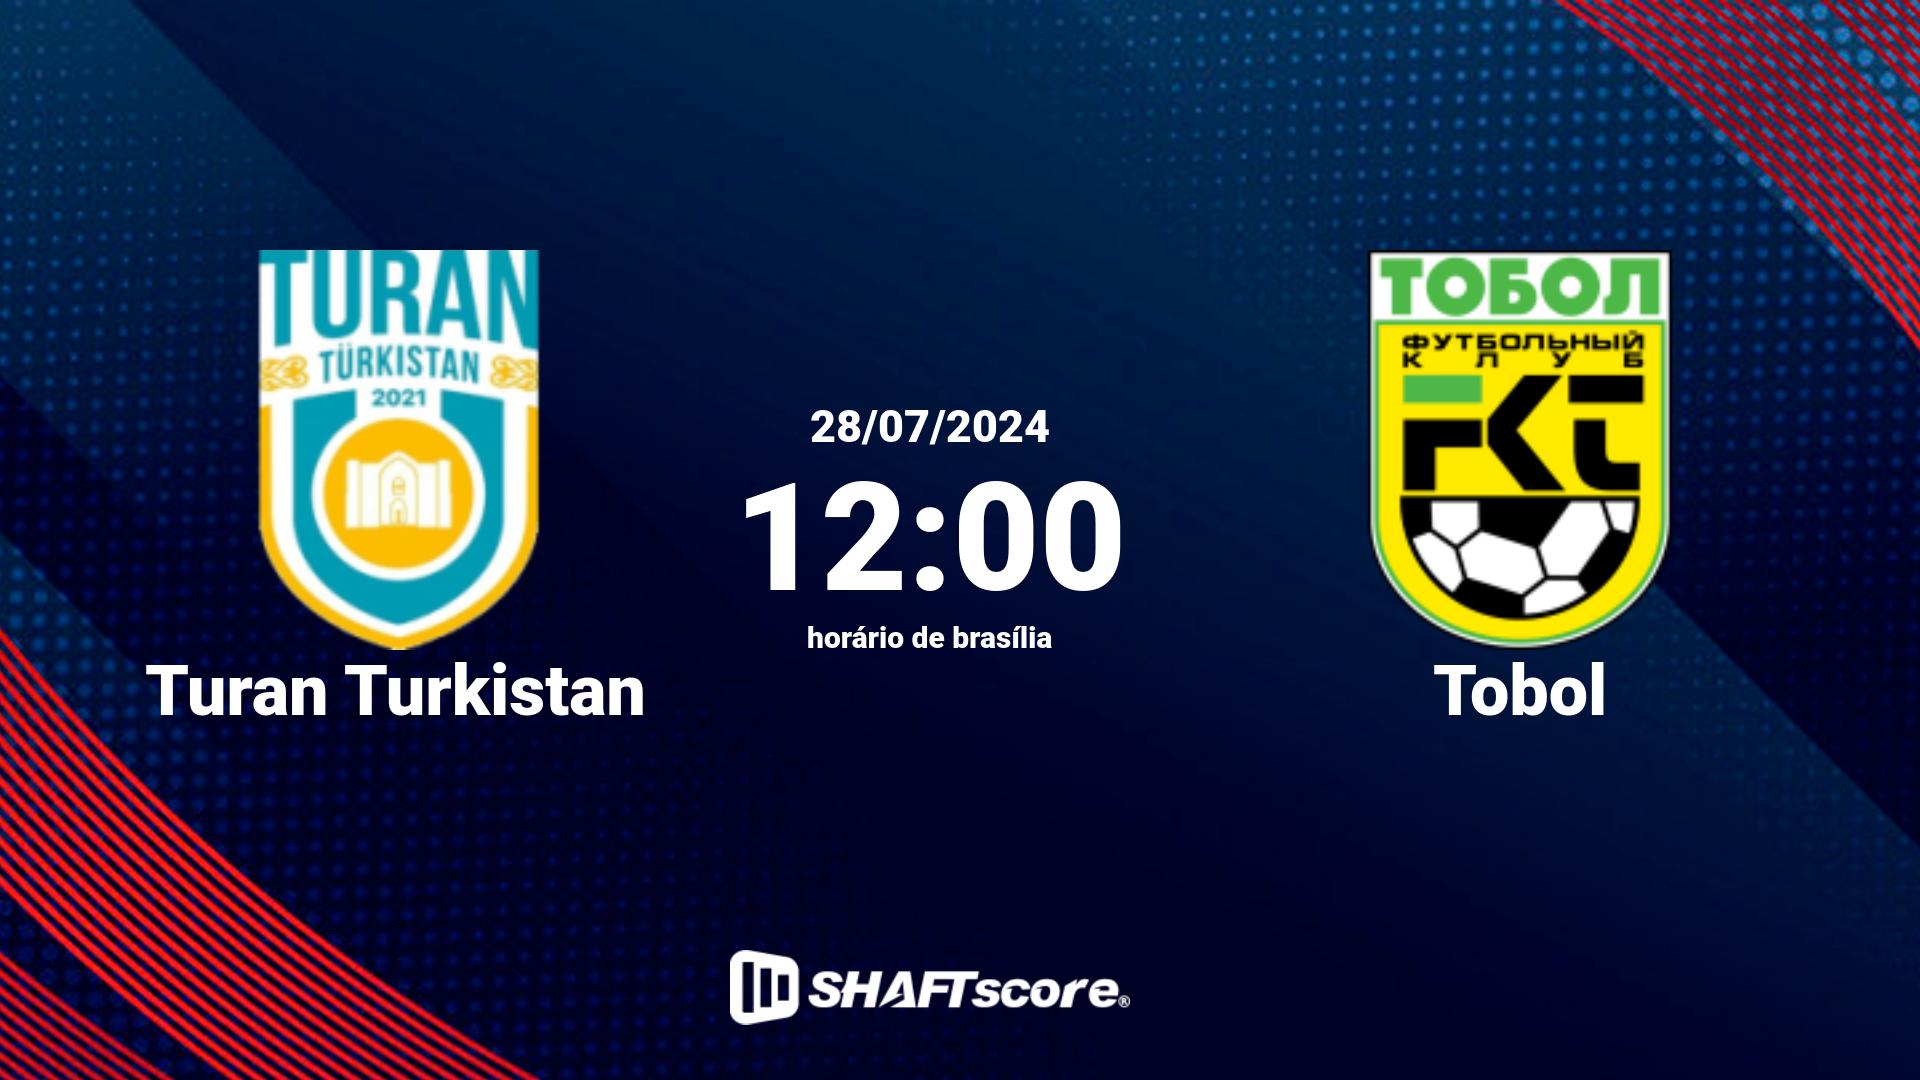 Estatísticas do jogo Turan Turkistan vs Tobol 28.07 12:00